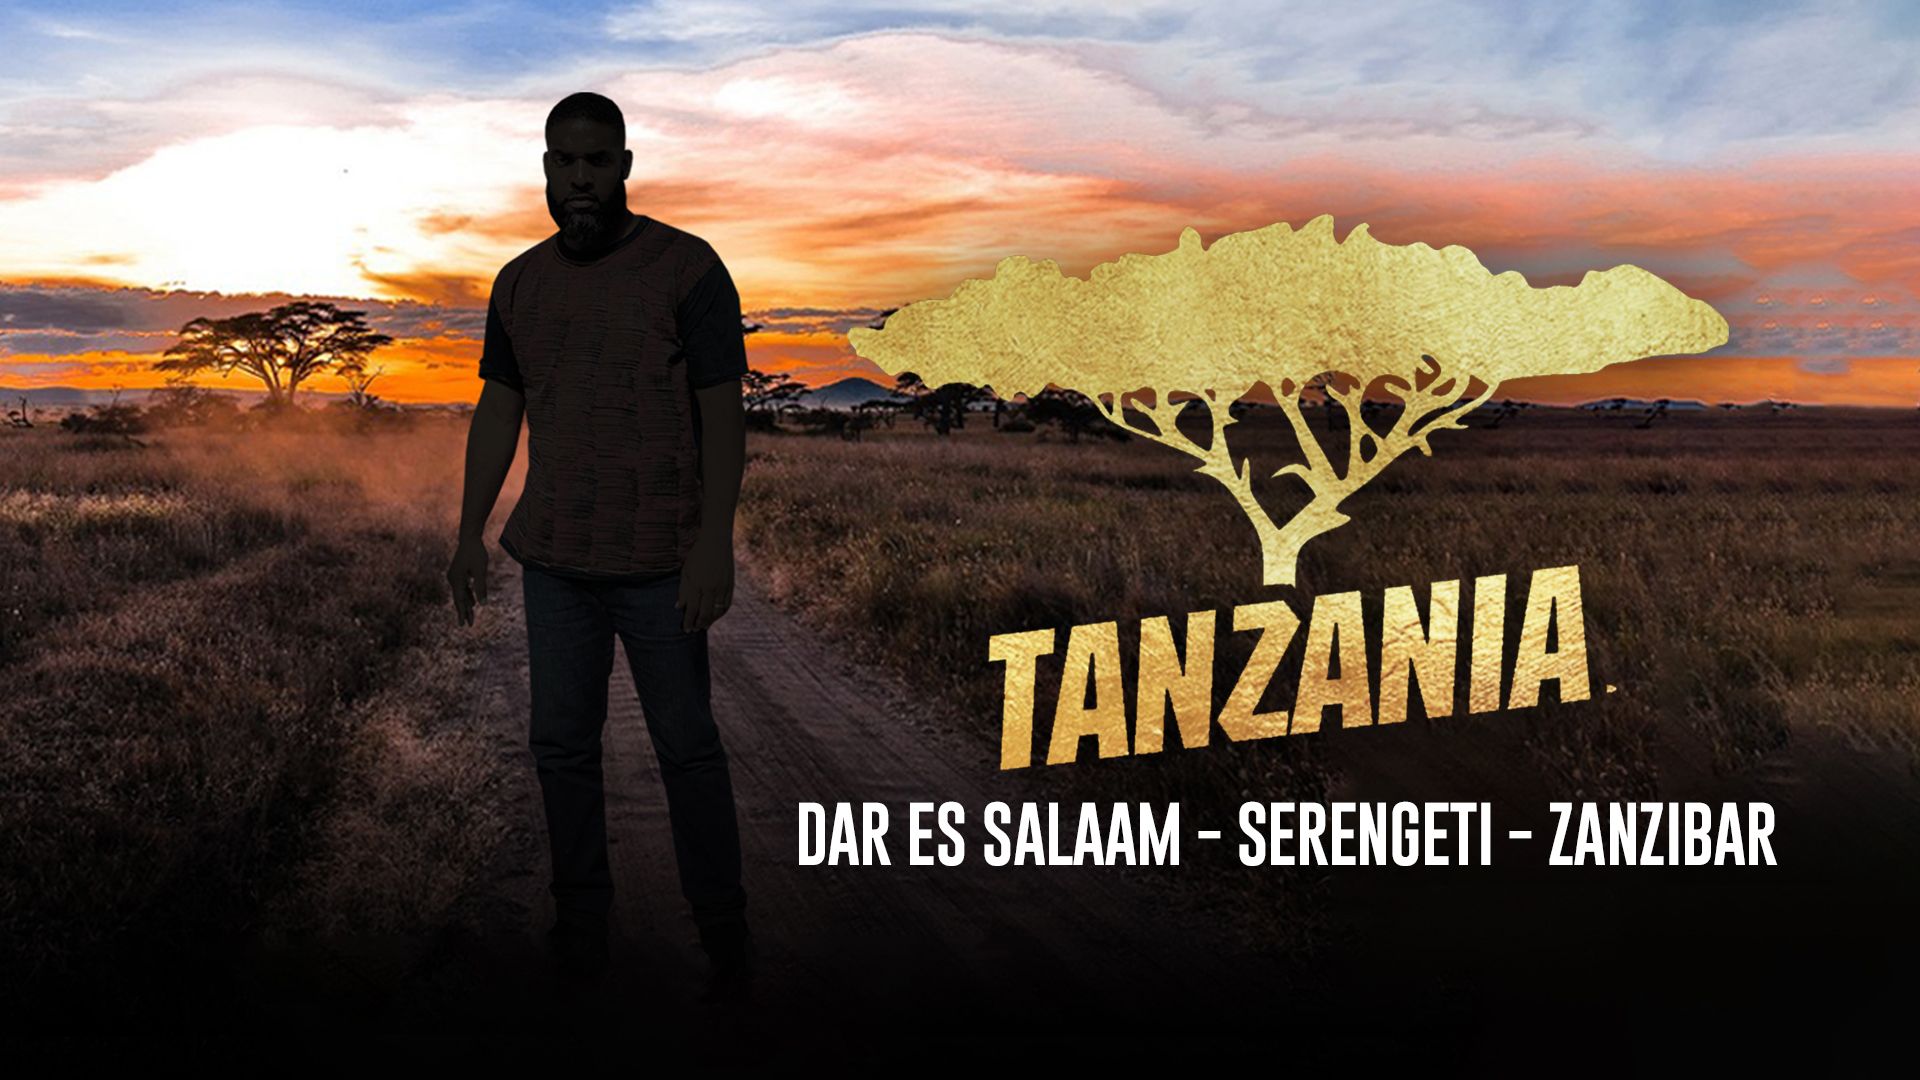 Tanzania: Dar Es Salaam - Serengeti - Zanzibar